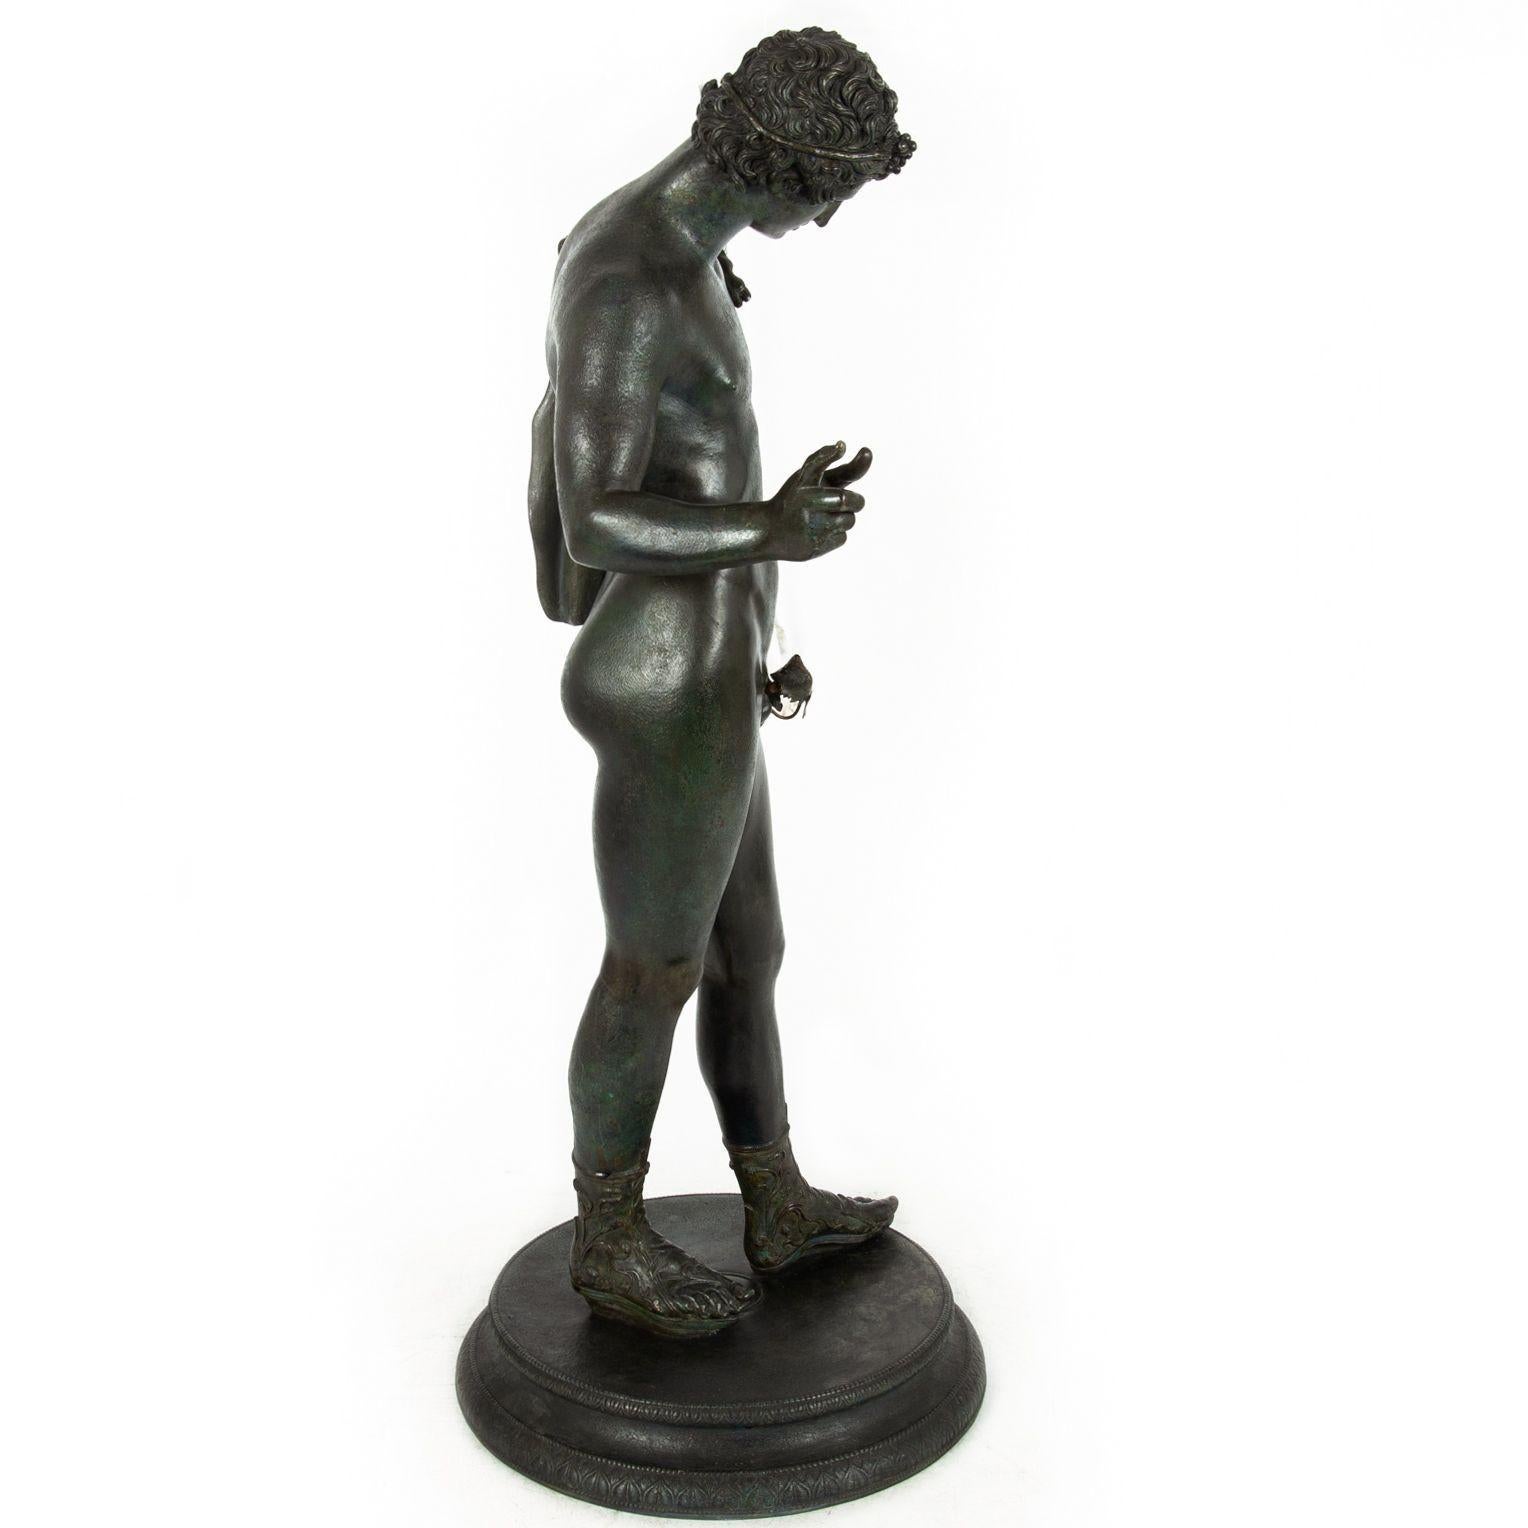 Italian Grand Tour Bronze Sculpture Statue “Narcissus” after Antiquity 16